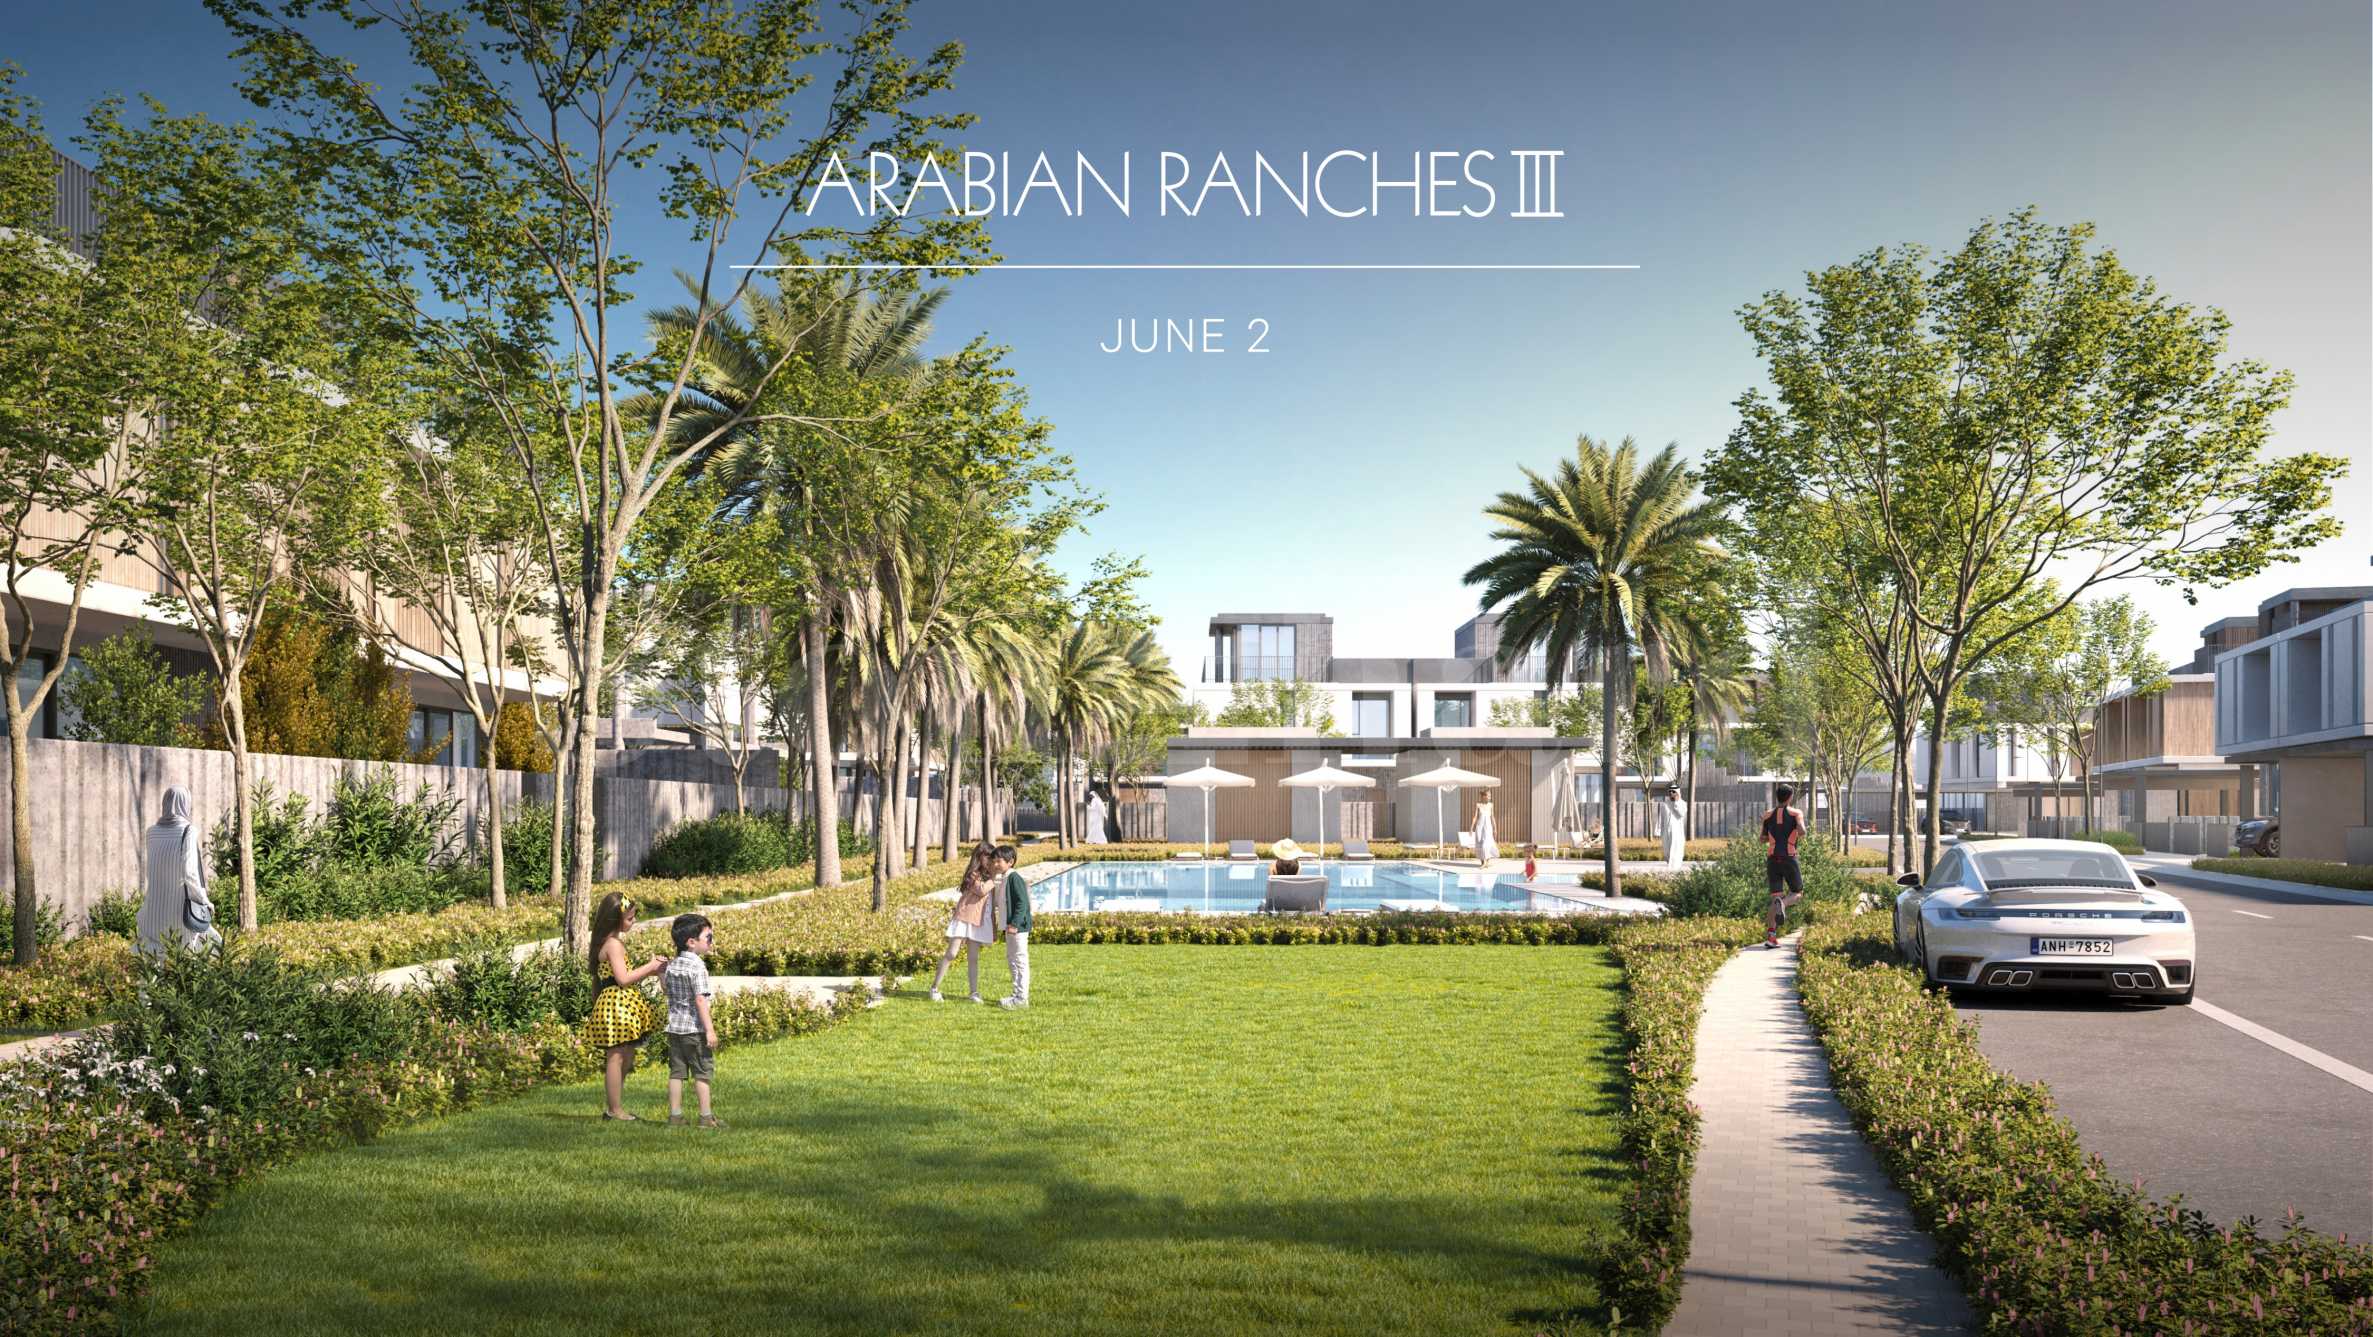 Villas for sale in June 2, Arabian Ranches III1 - Stonehard